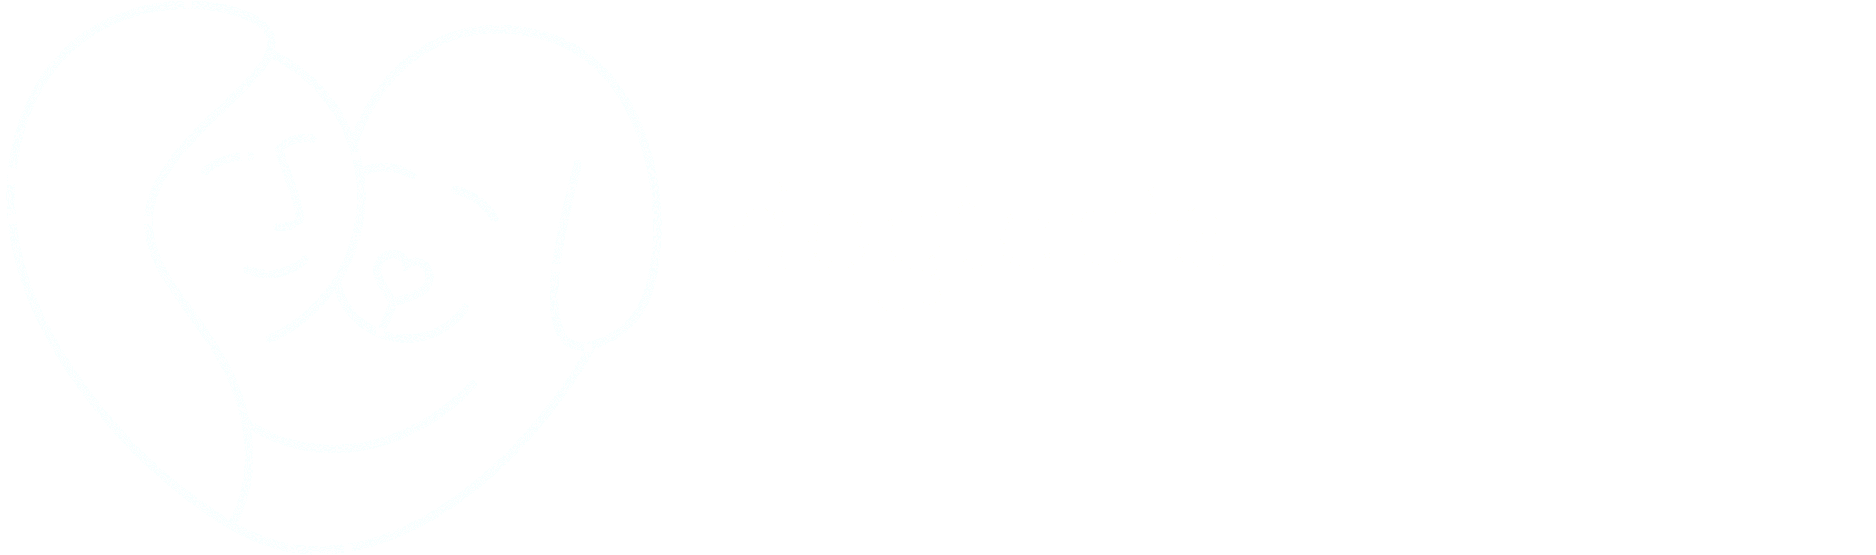 Dogtopia Foundation. Fetch it Forward.